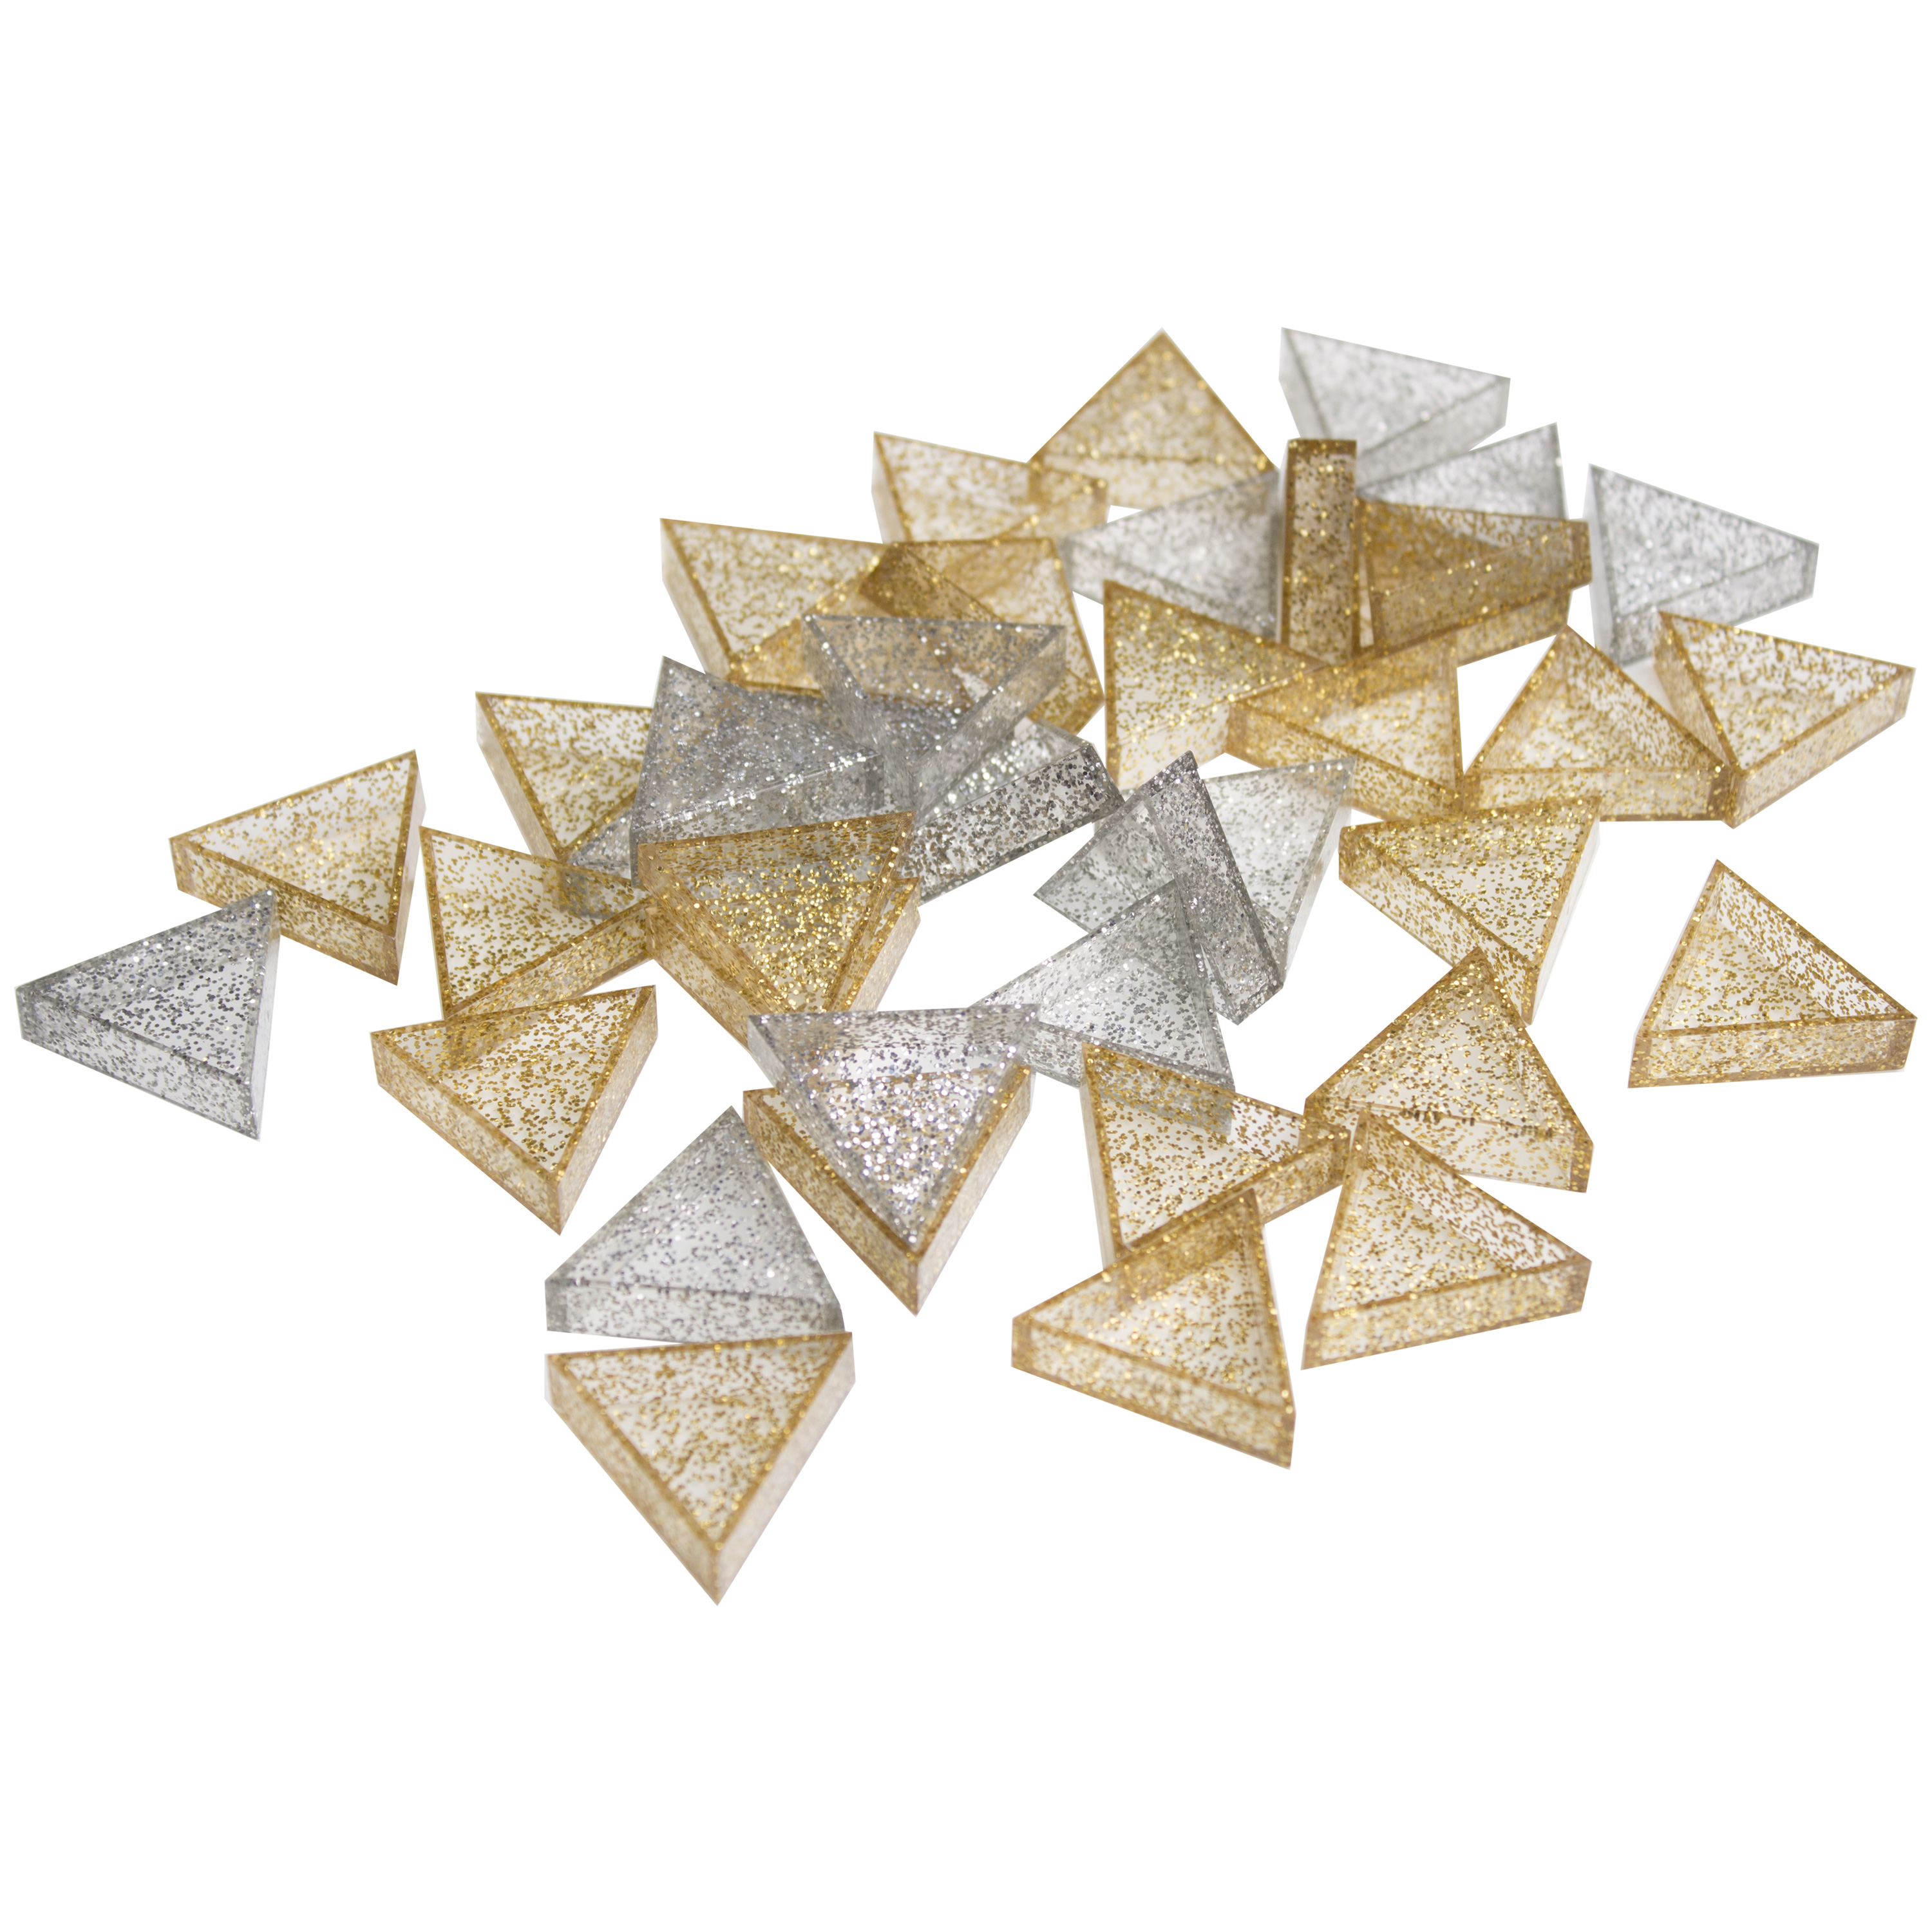 Ecko kleine Dreiecke 'gold/silber', 500 Teile